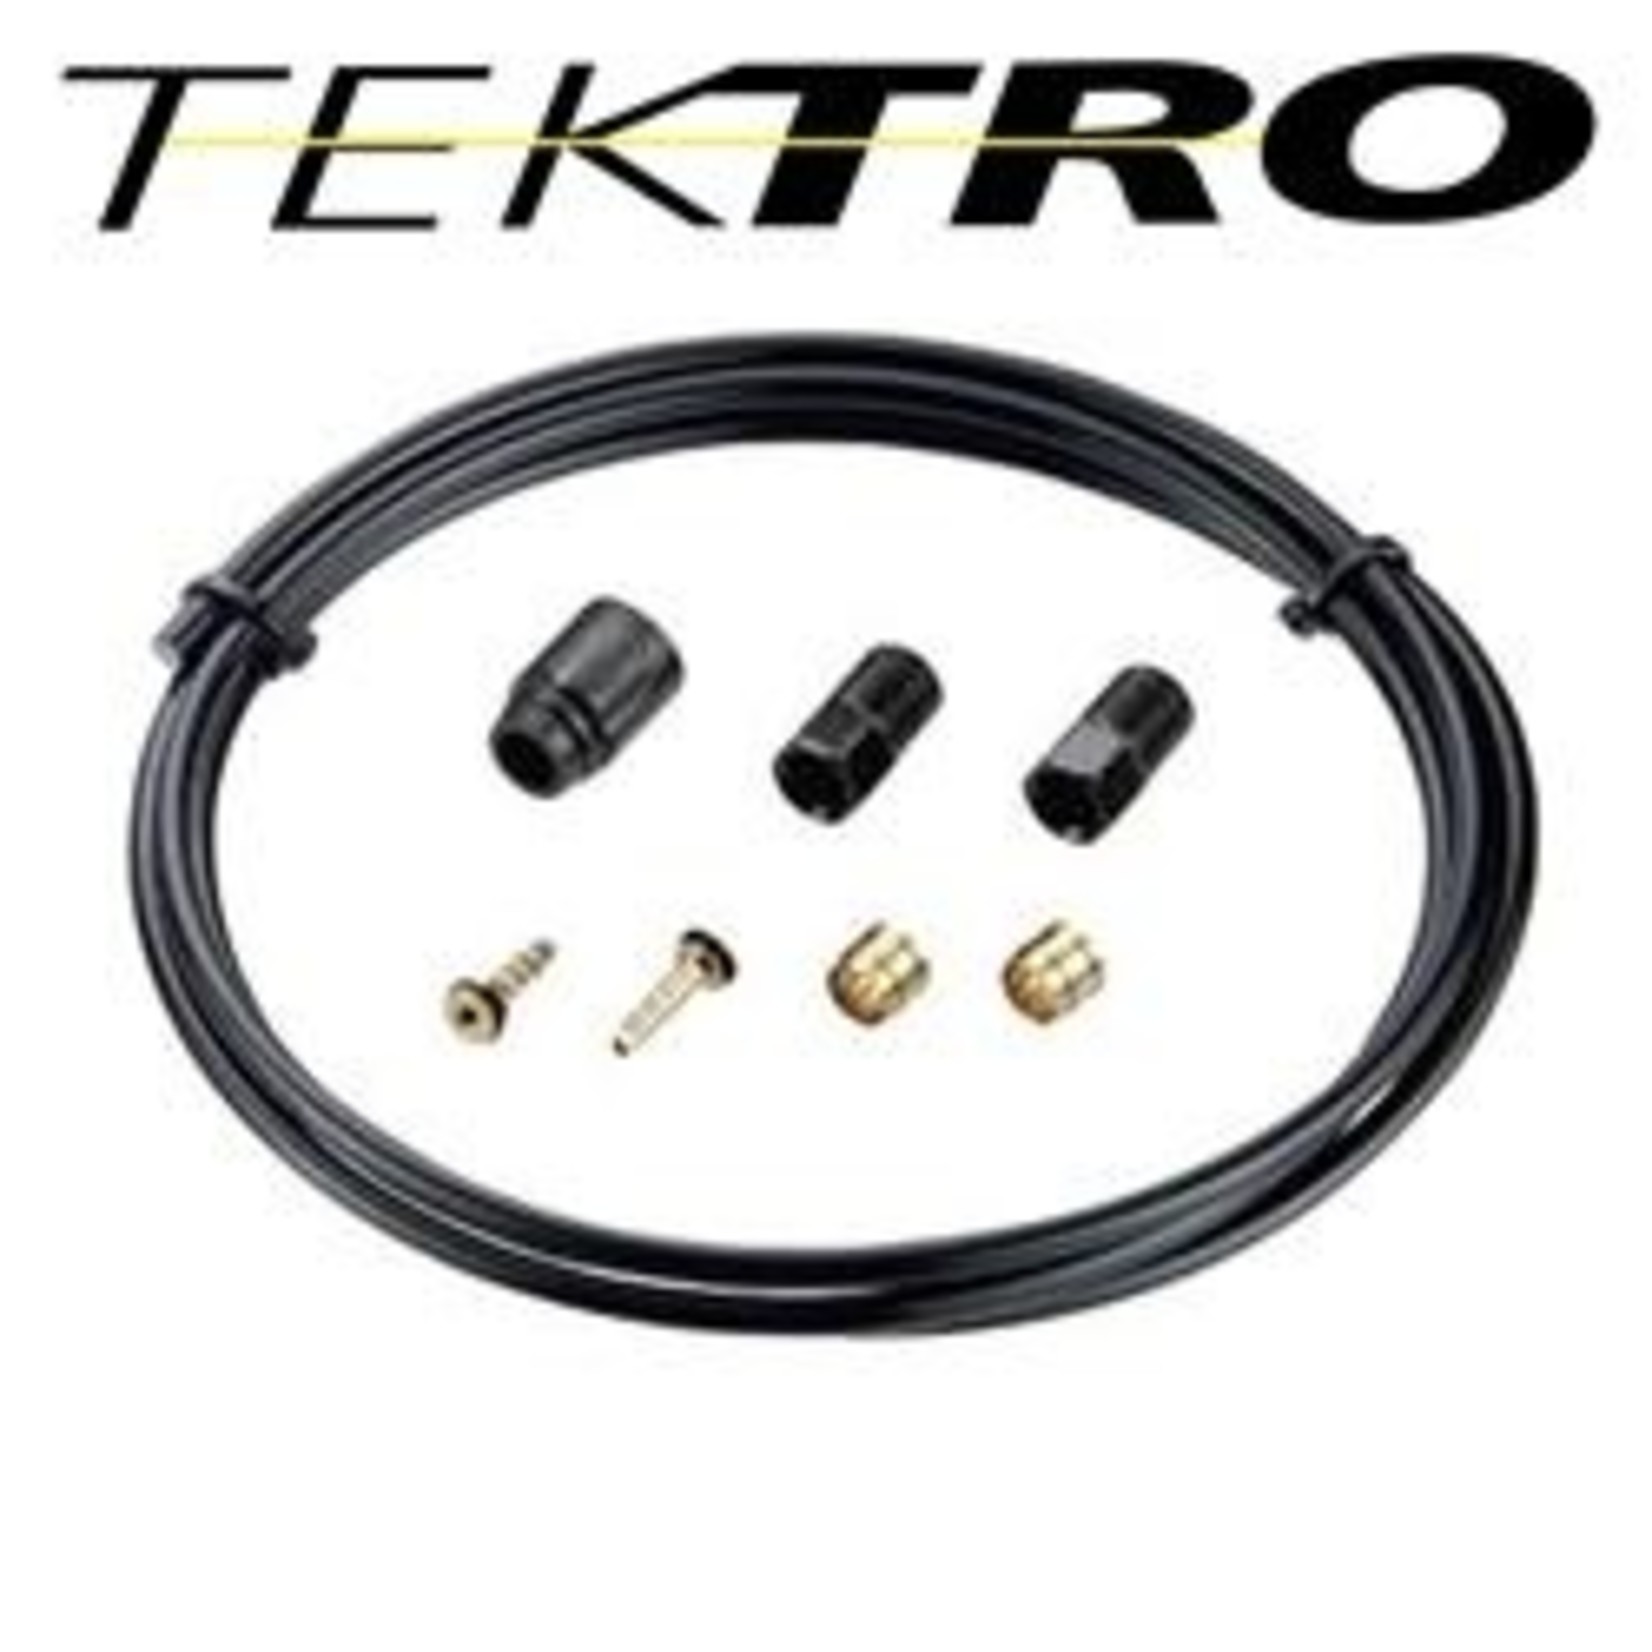 Tektro Tektro Bike Hose Connector Kit - M290